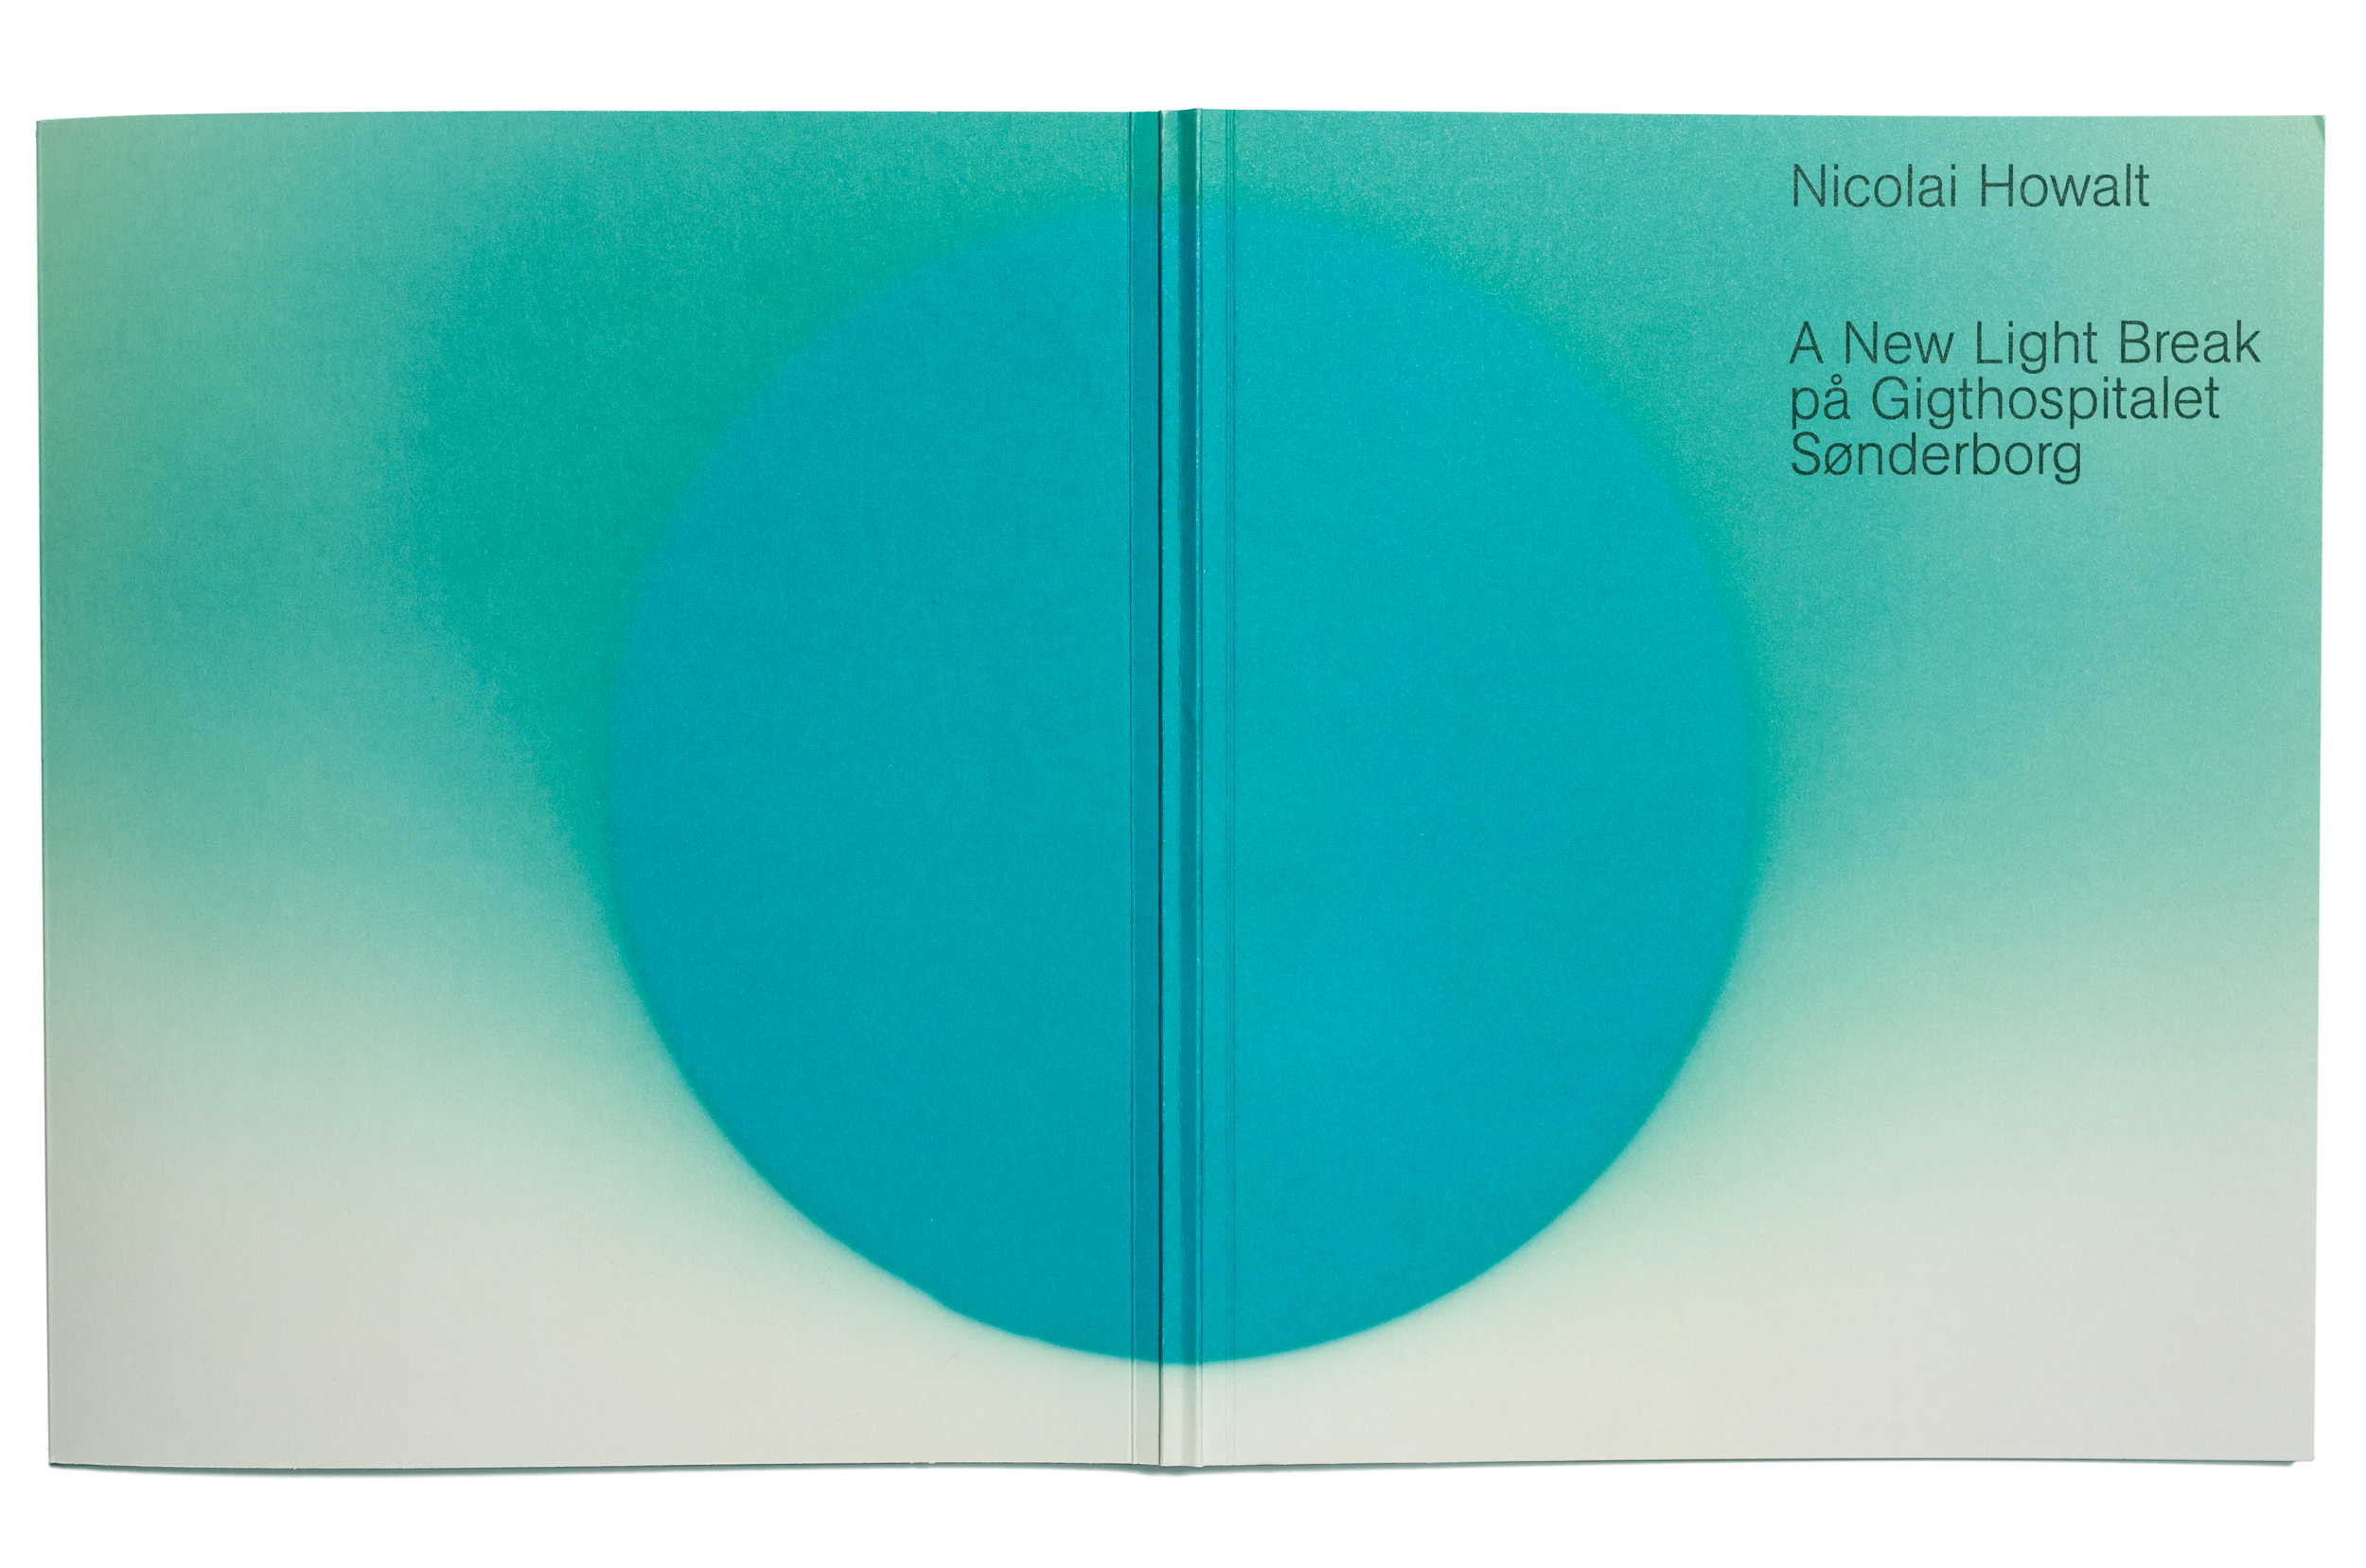 A new light break booklet by Nicolai Howalt